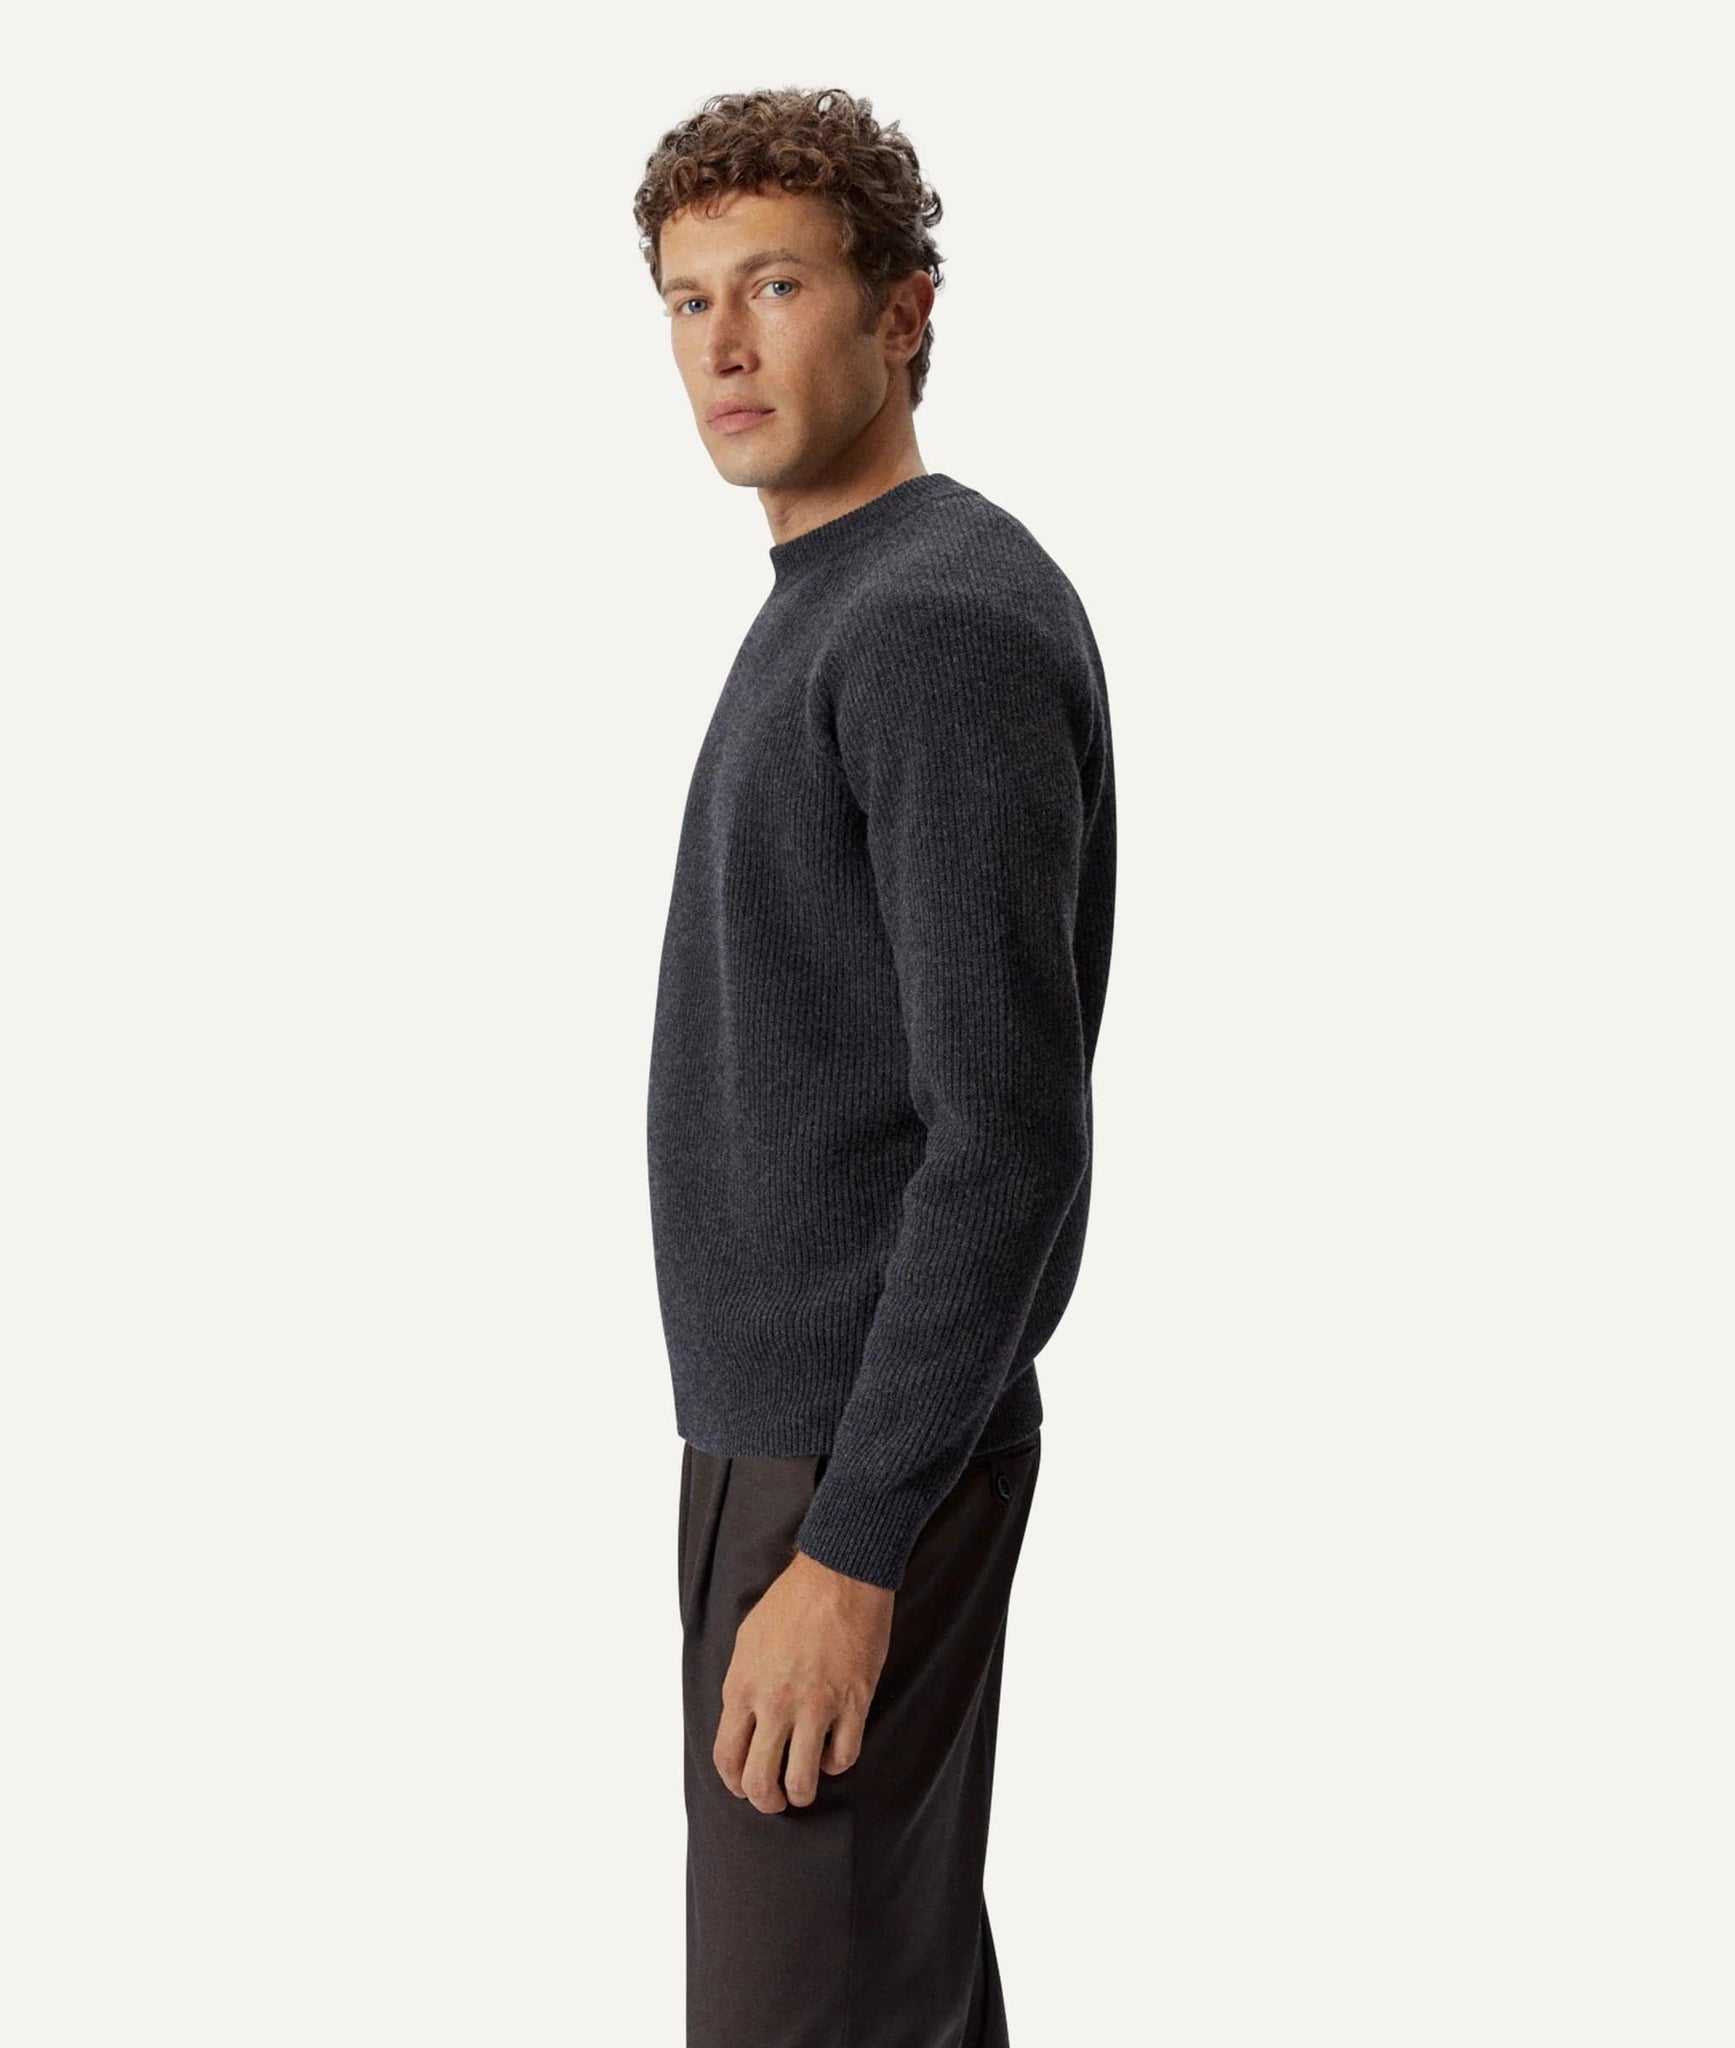 The Woolen Ribbed Raglan Sweater